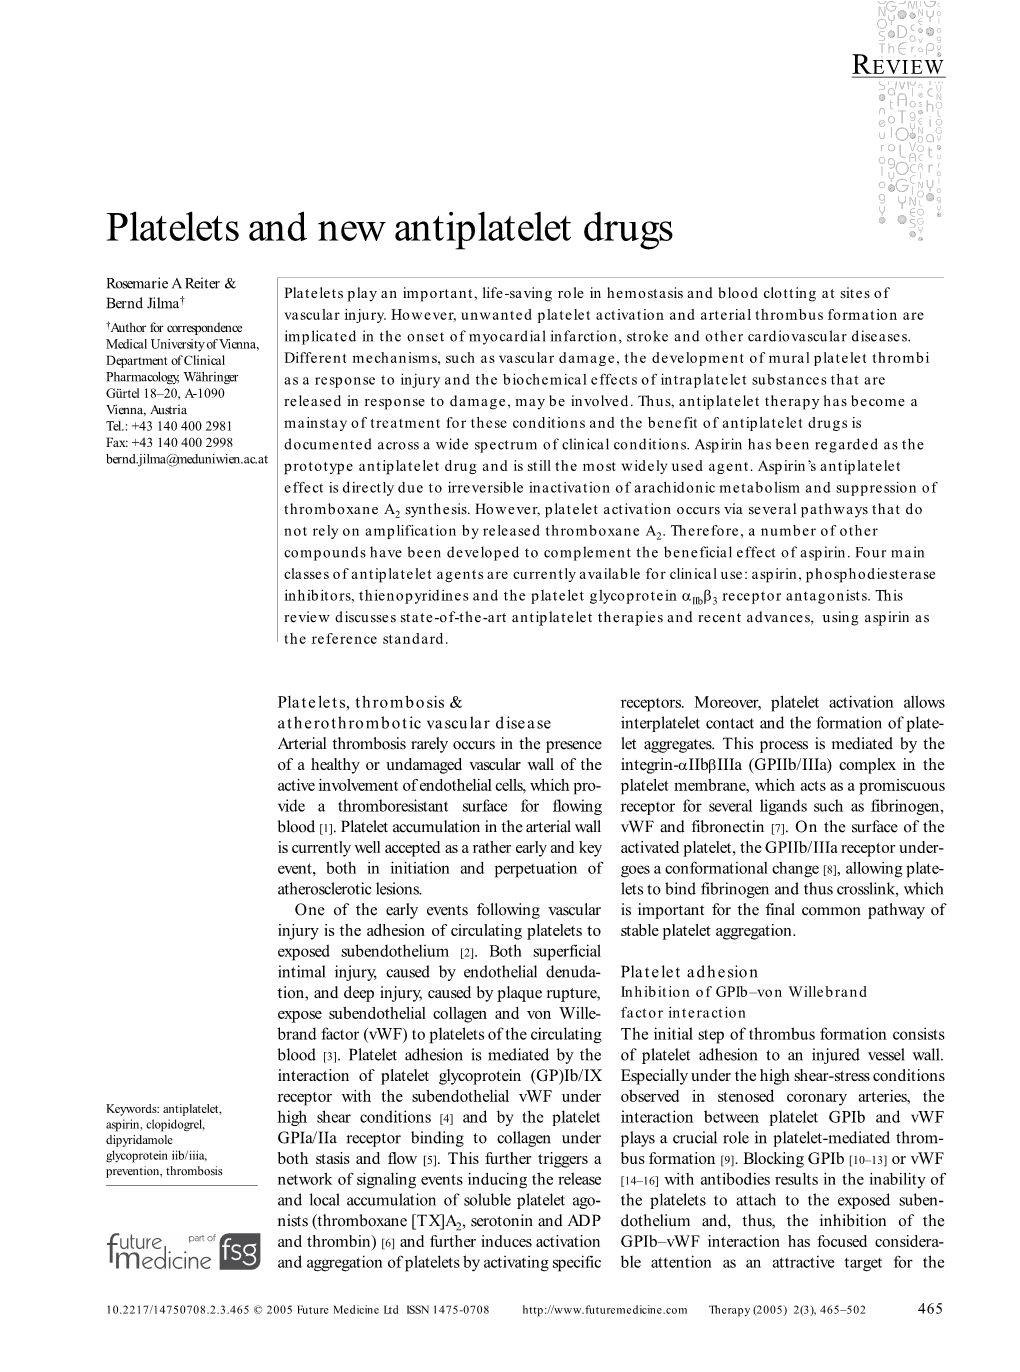 Platelets and New Antiplatelet Drugs